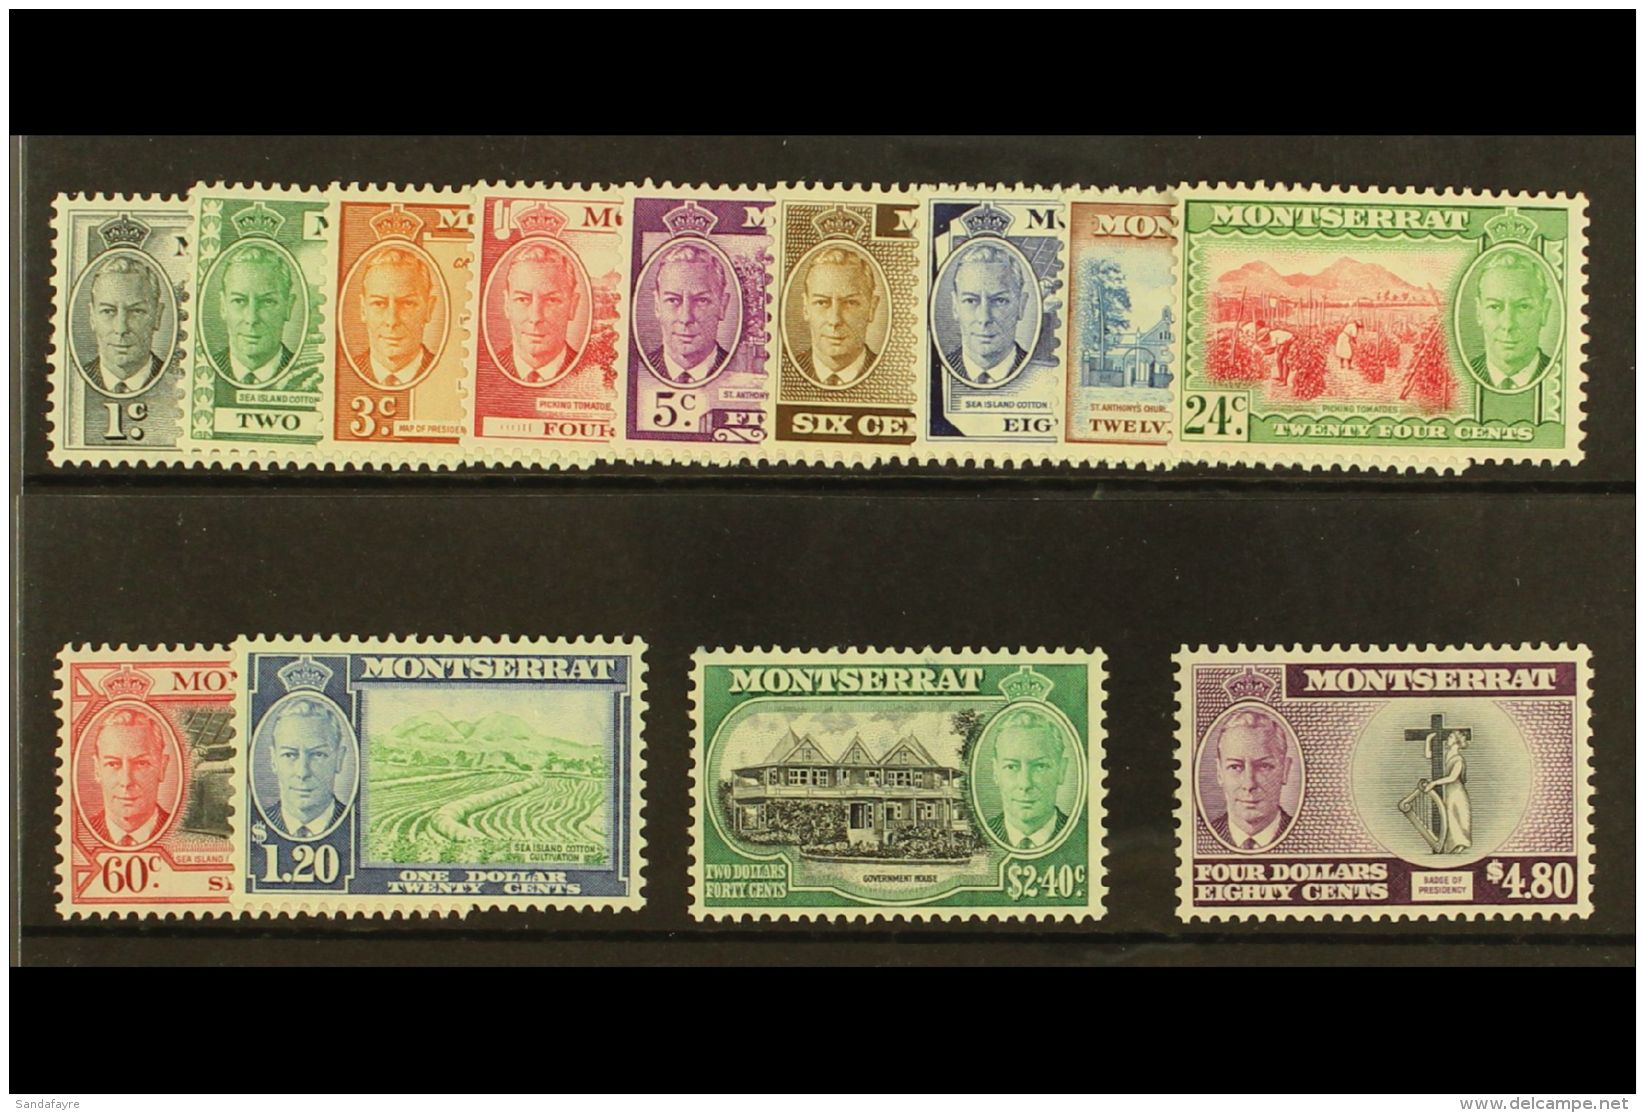 1951 Complete Defin Set, SG 123/135, NHM, $2.40 Print Marks (13) For More Images, Please Visit... - Montserrat